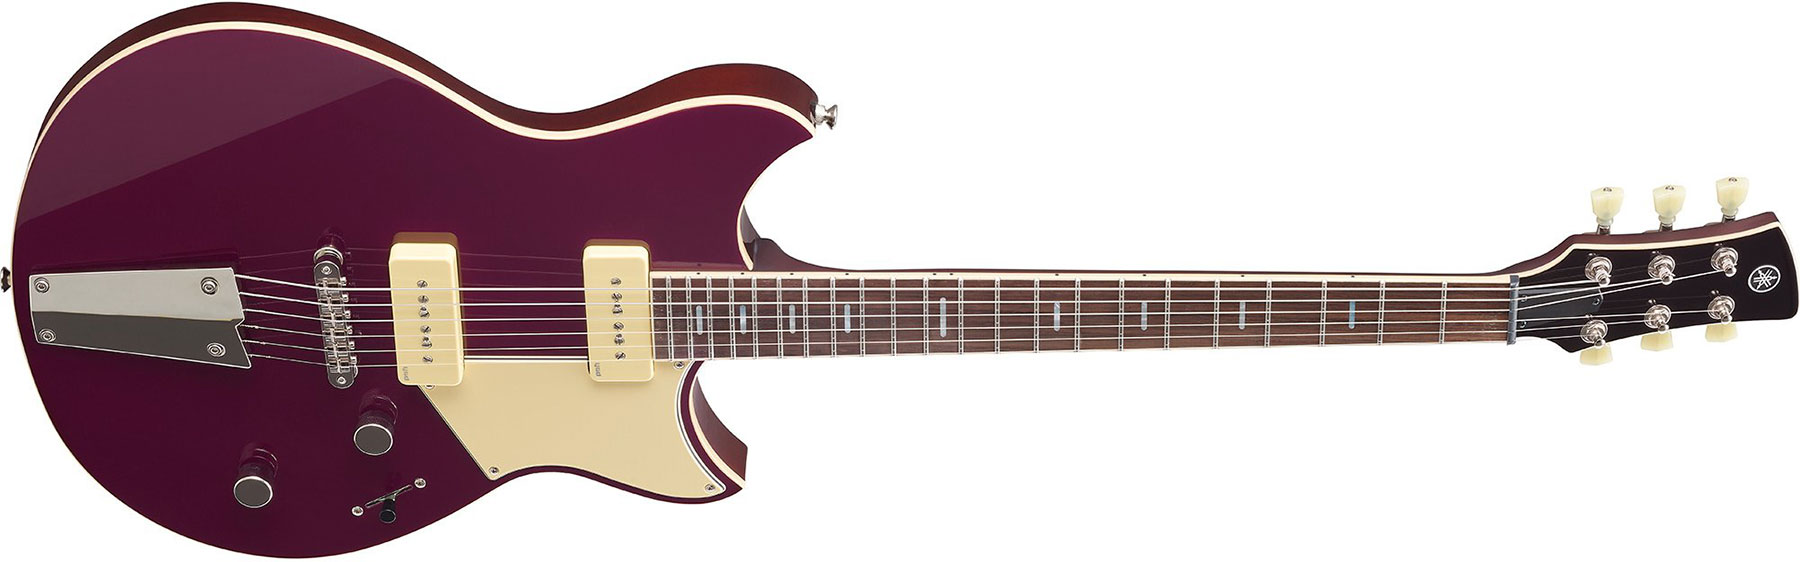 Yamaha Rss02t Revstar Standard 2p90 Ht Rw - Hot Merlot - Guitarra eléctrica de doble corte. - Variation 1